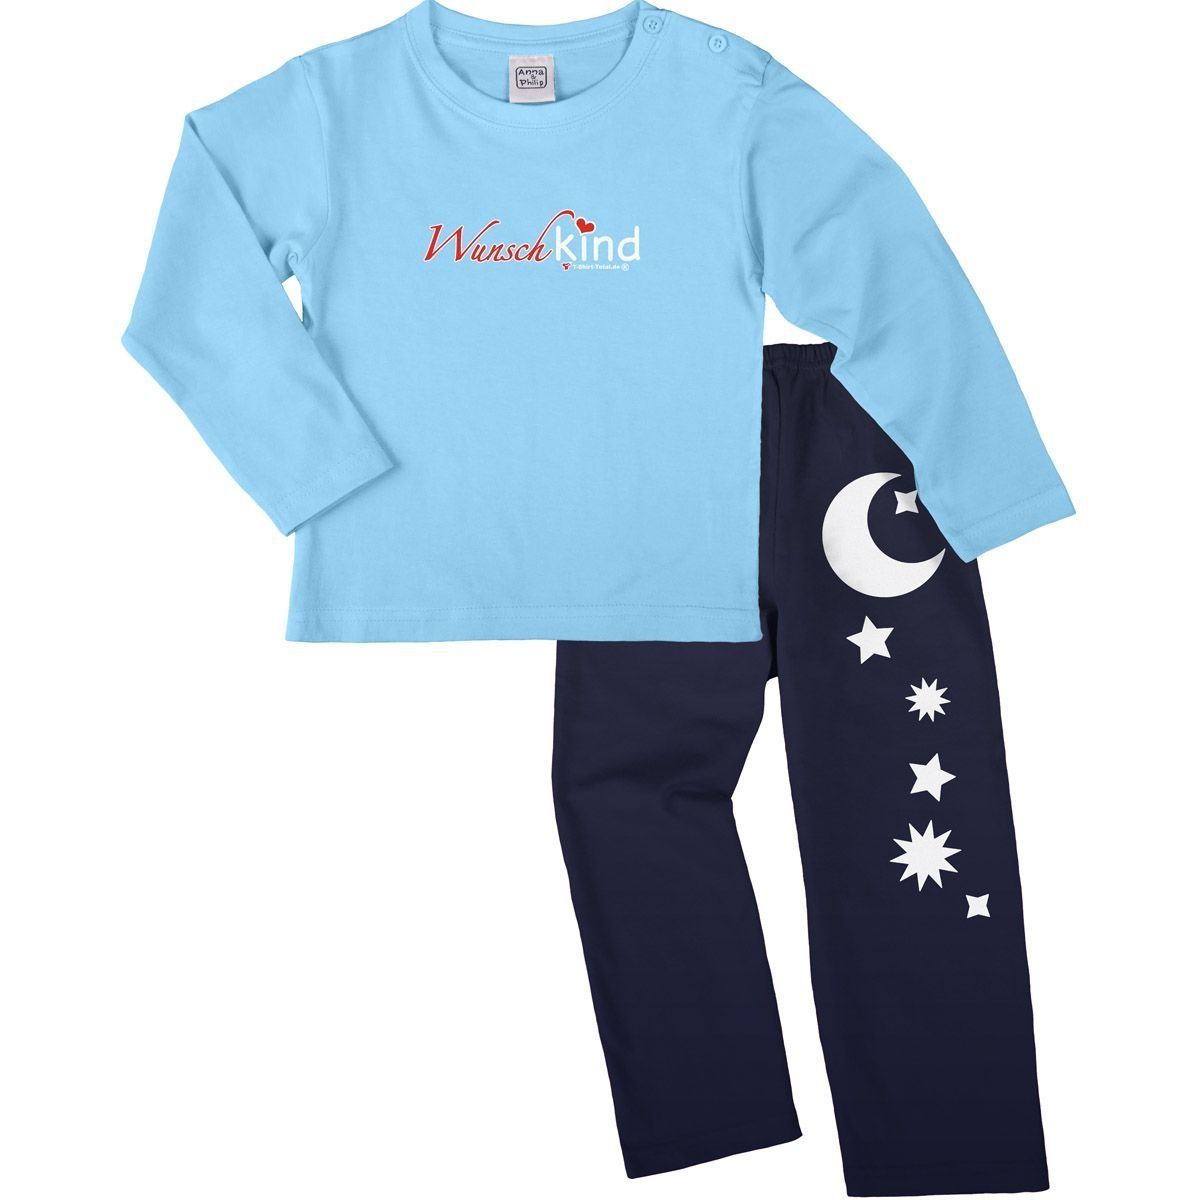 Wunschkind Pyjama Set hellblau / navy 110 / 116